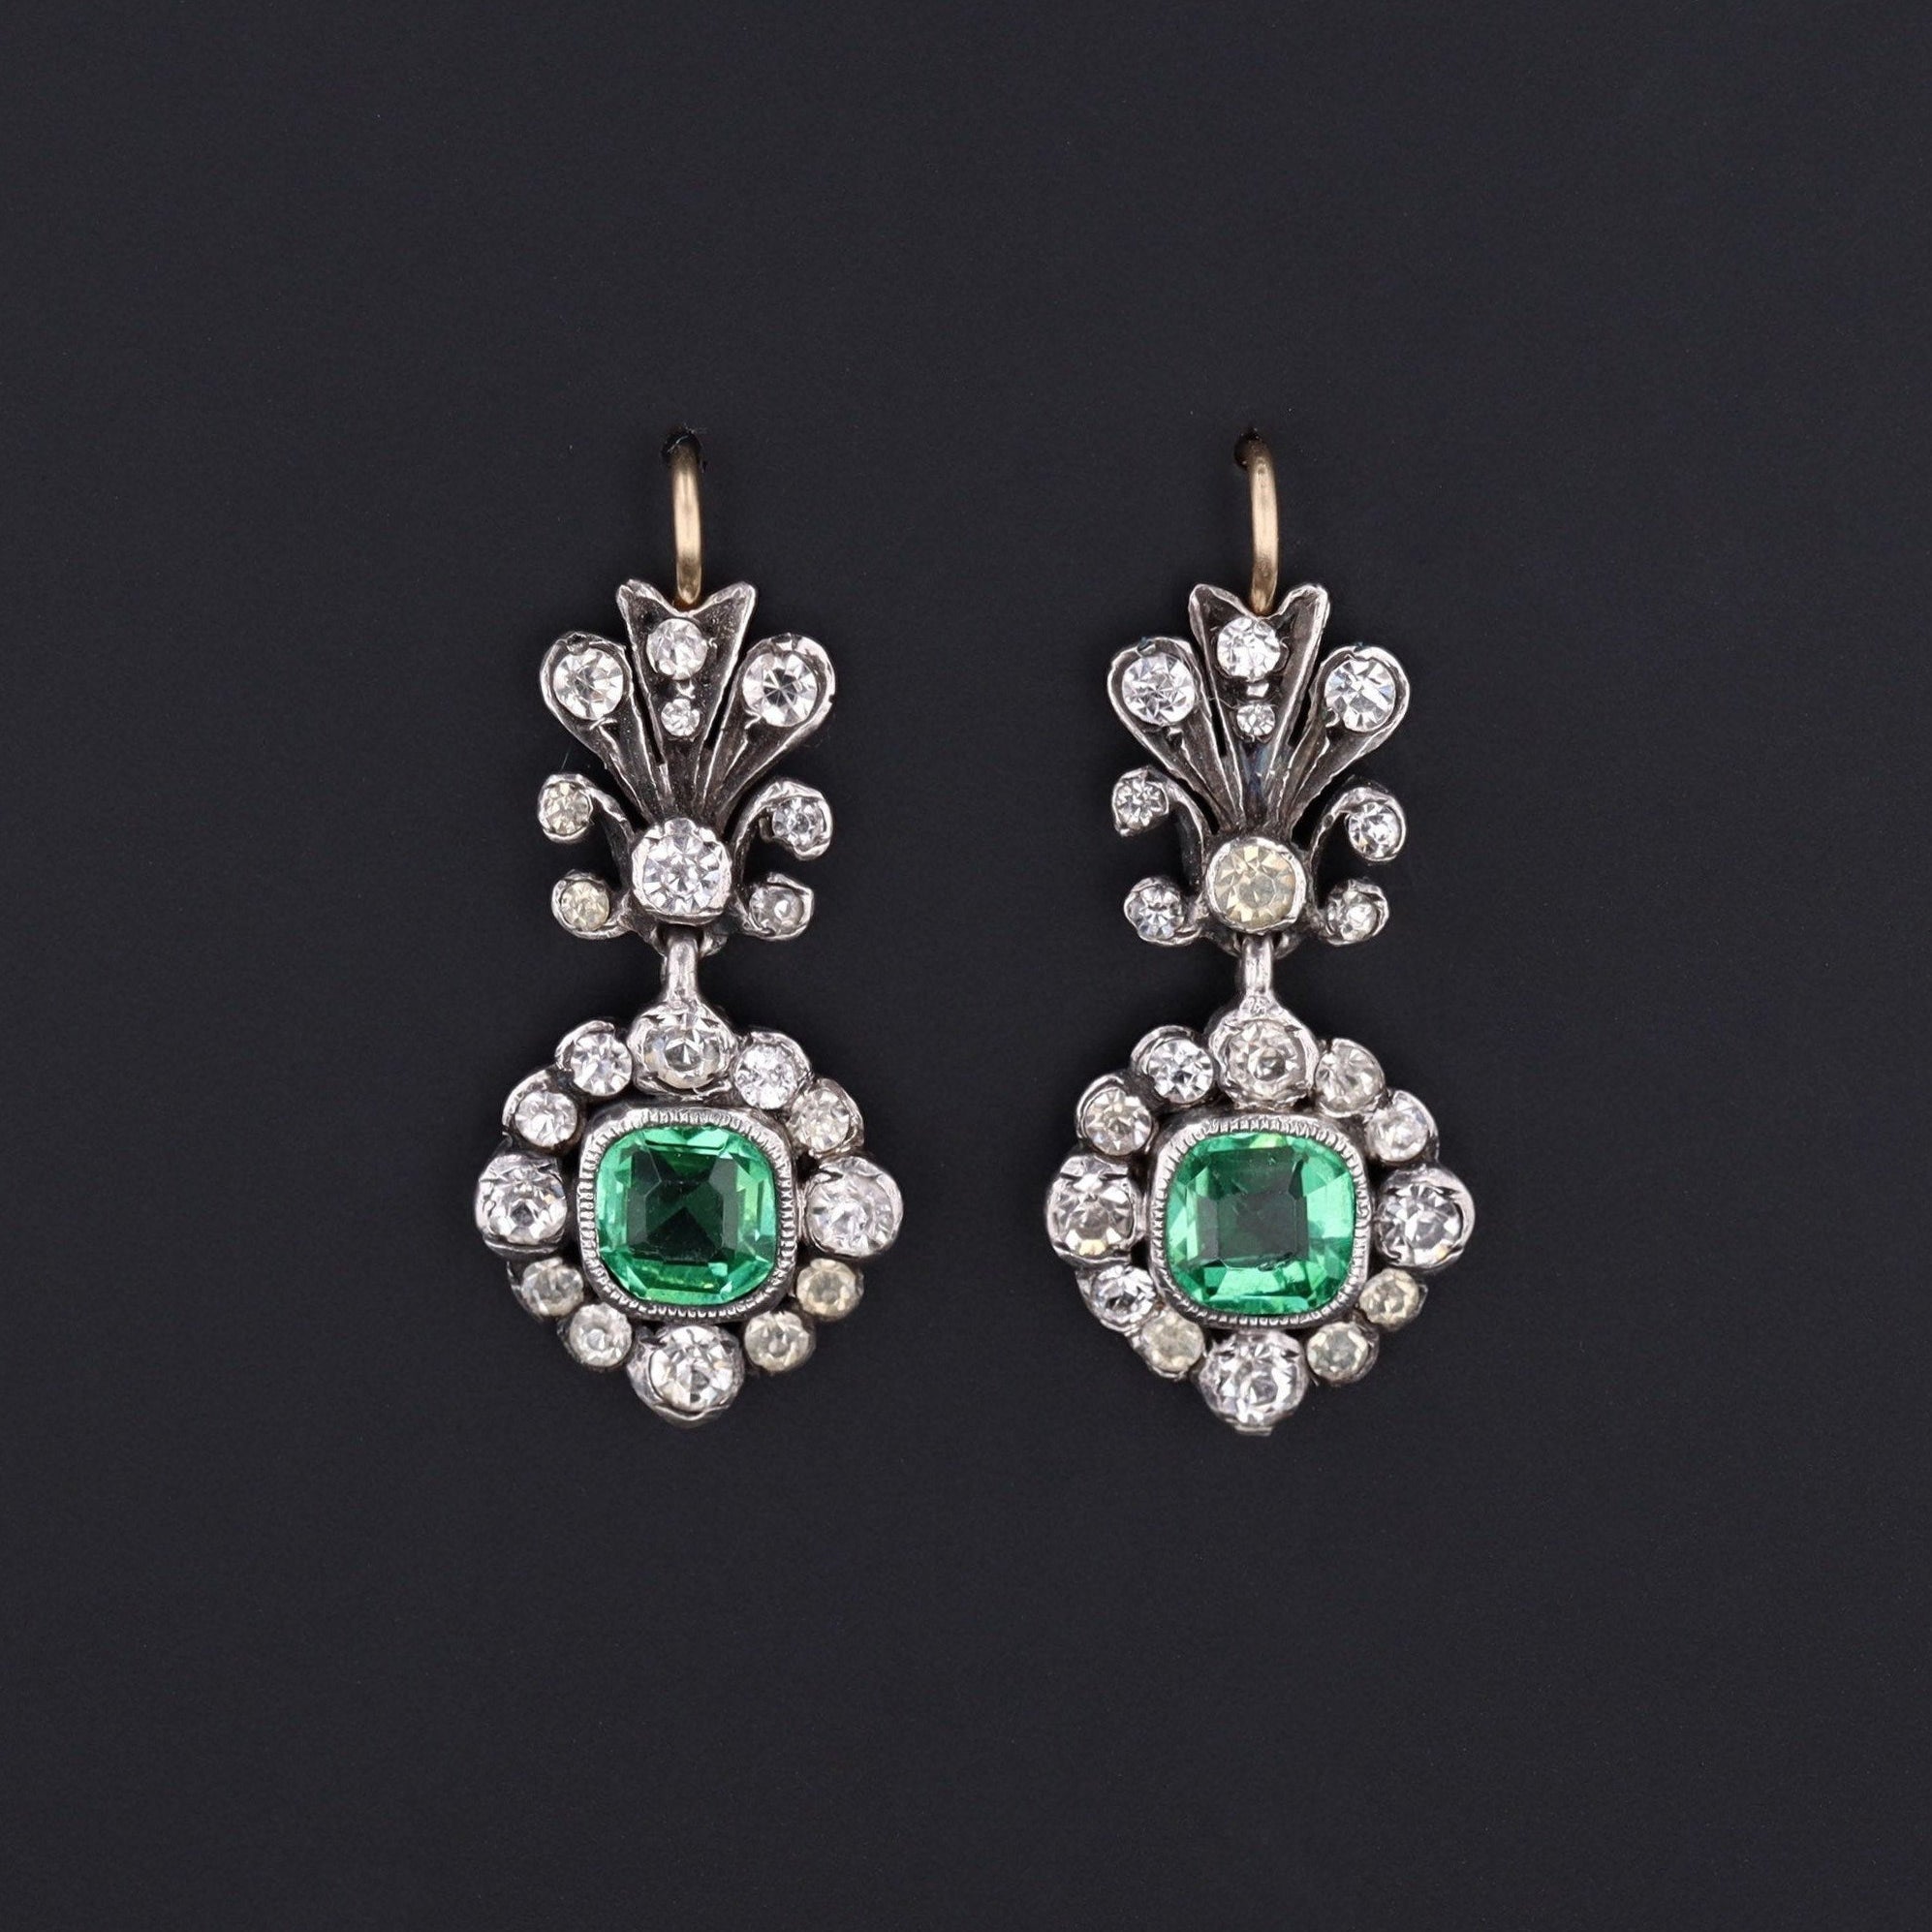 Antique Green and Clear Paste Earrings | 14k Gold & Silver Earrings | Bracelet Conversion Earrings | Antique Paste